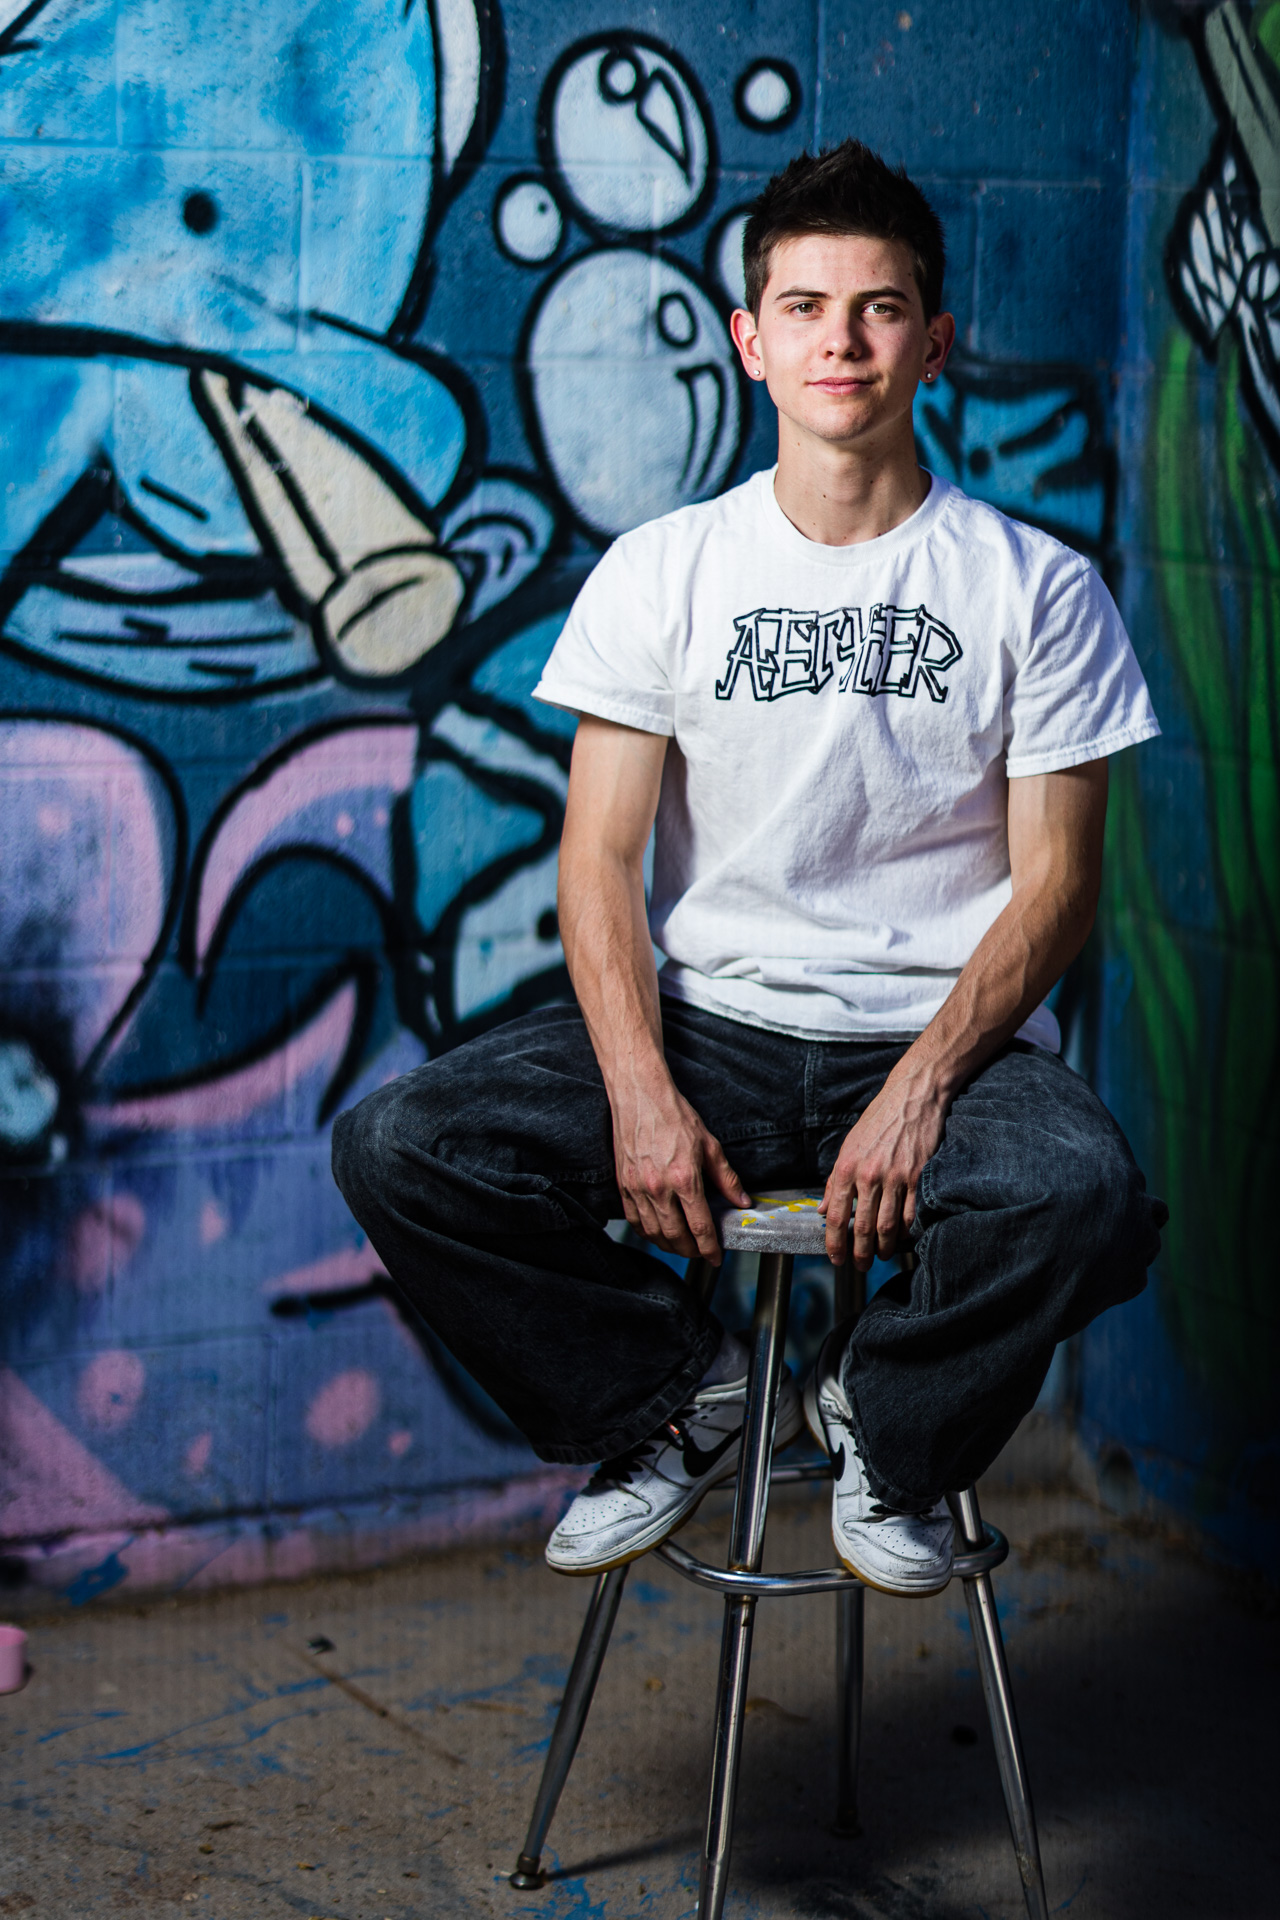 Male High School Senior sitting on bar stool with graffiti background